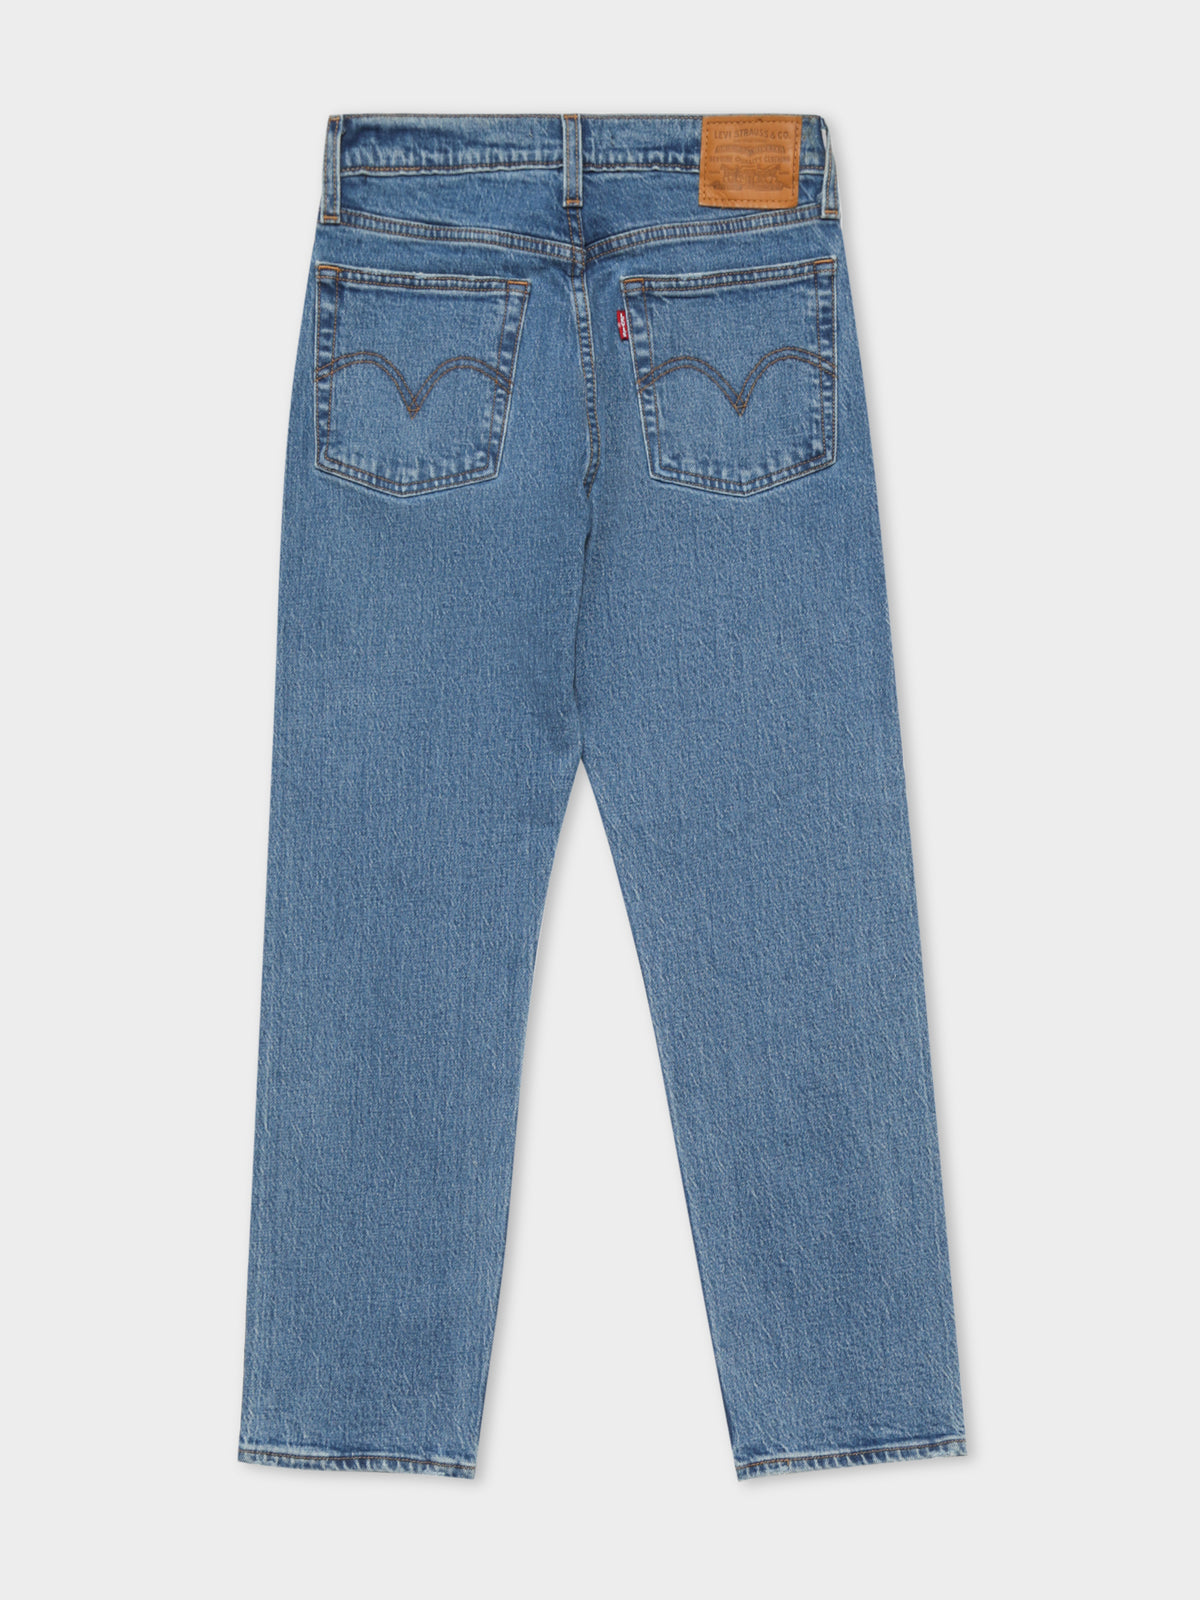 Wedgie Straight Leg Jeans in Medium Wash Jive Tone